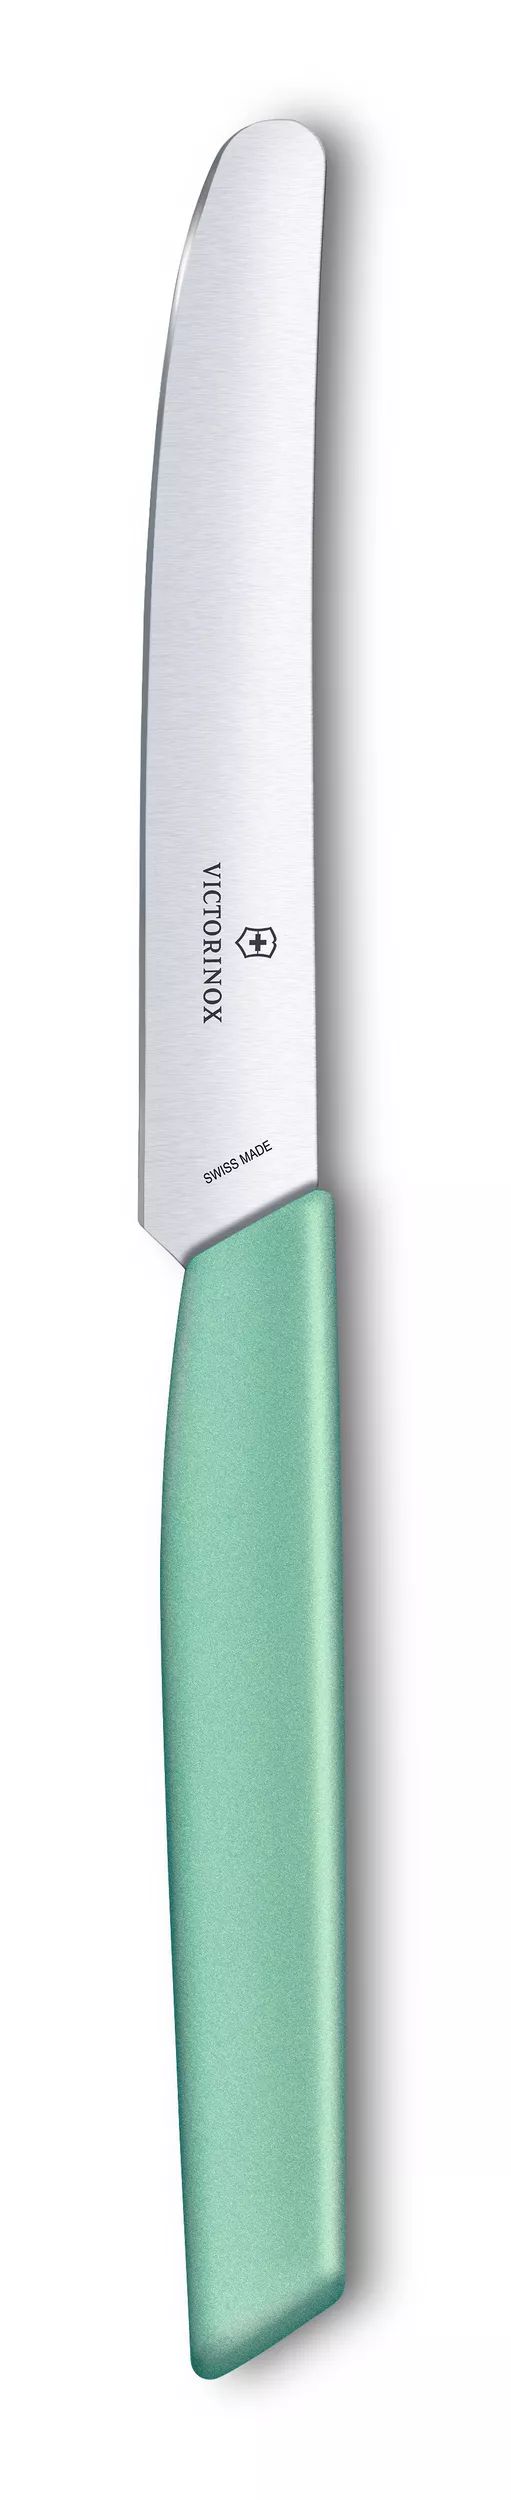 Swiss Modern Table Knife - 6.9006.1141